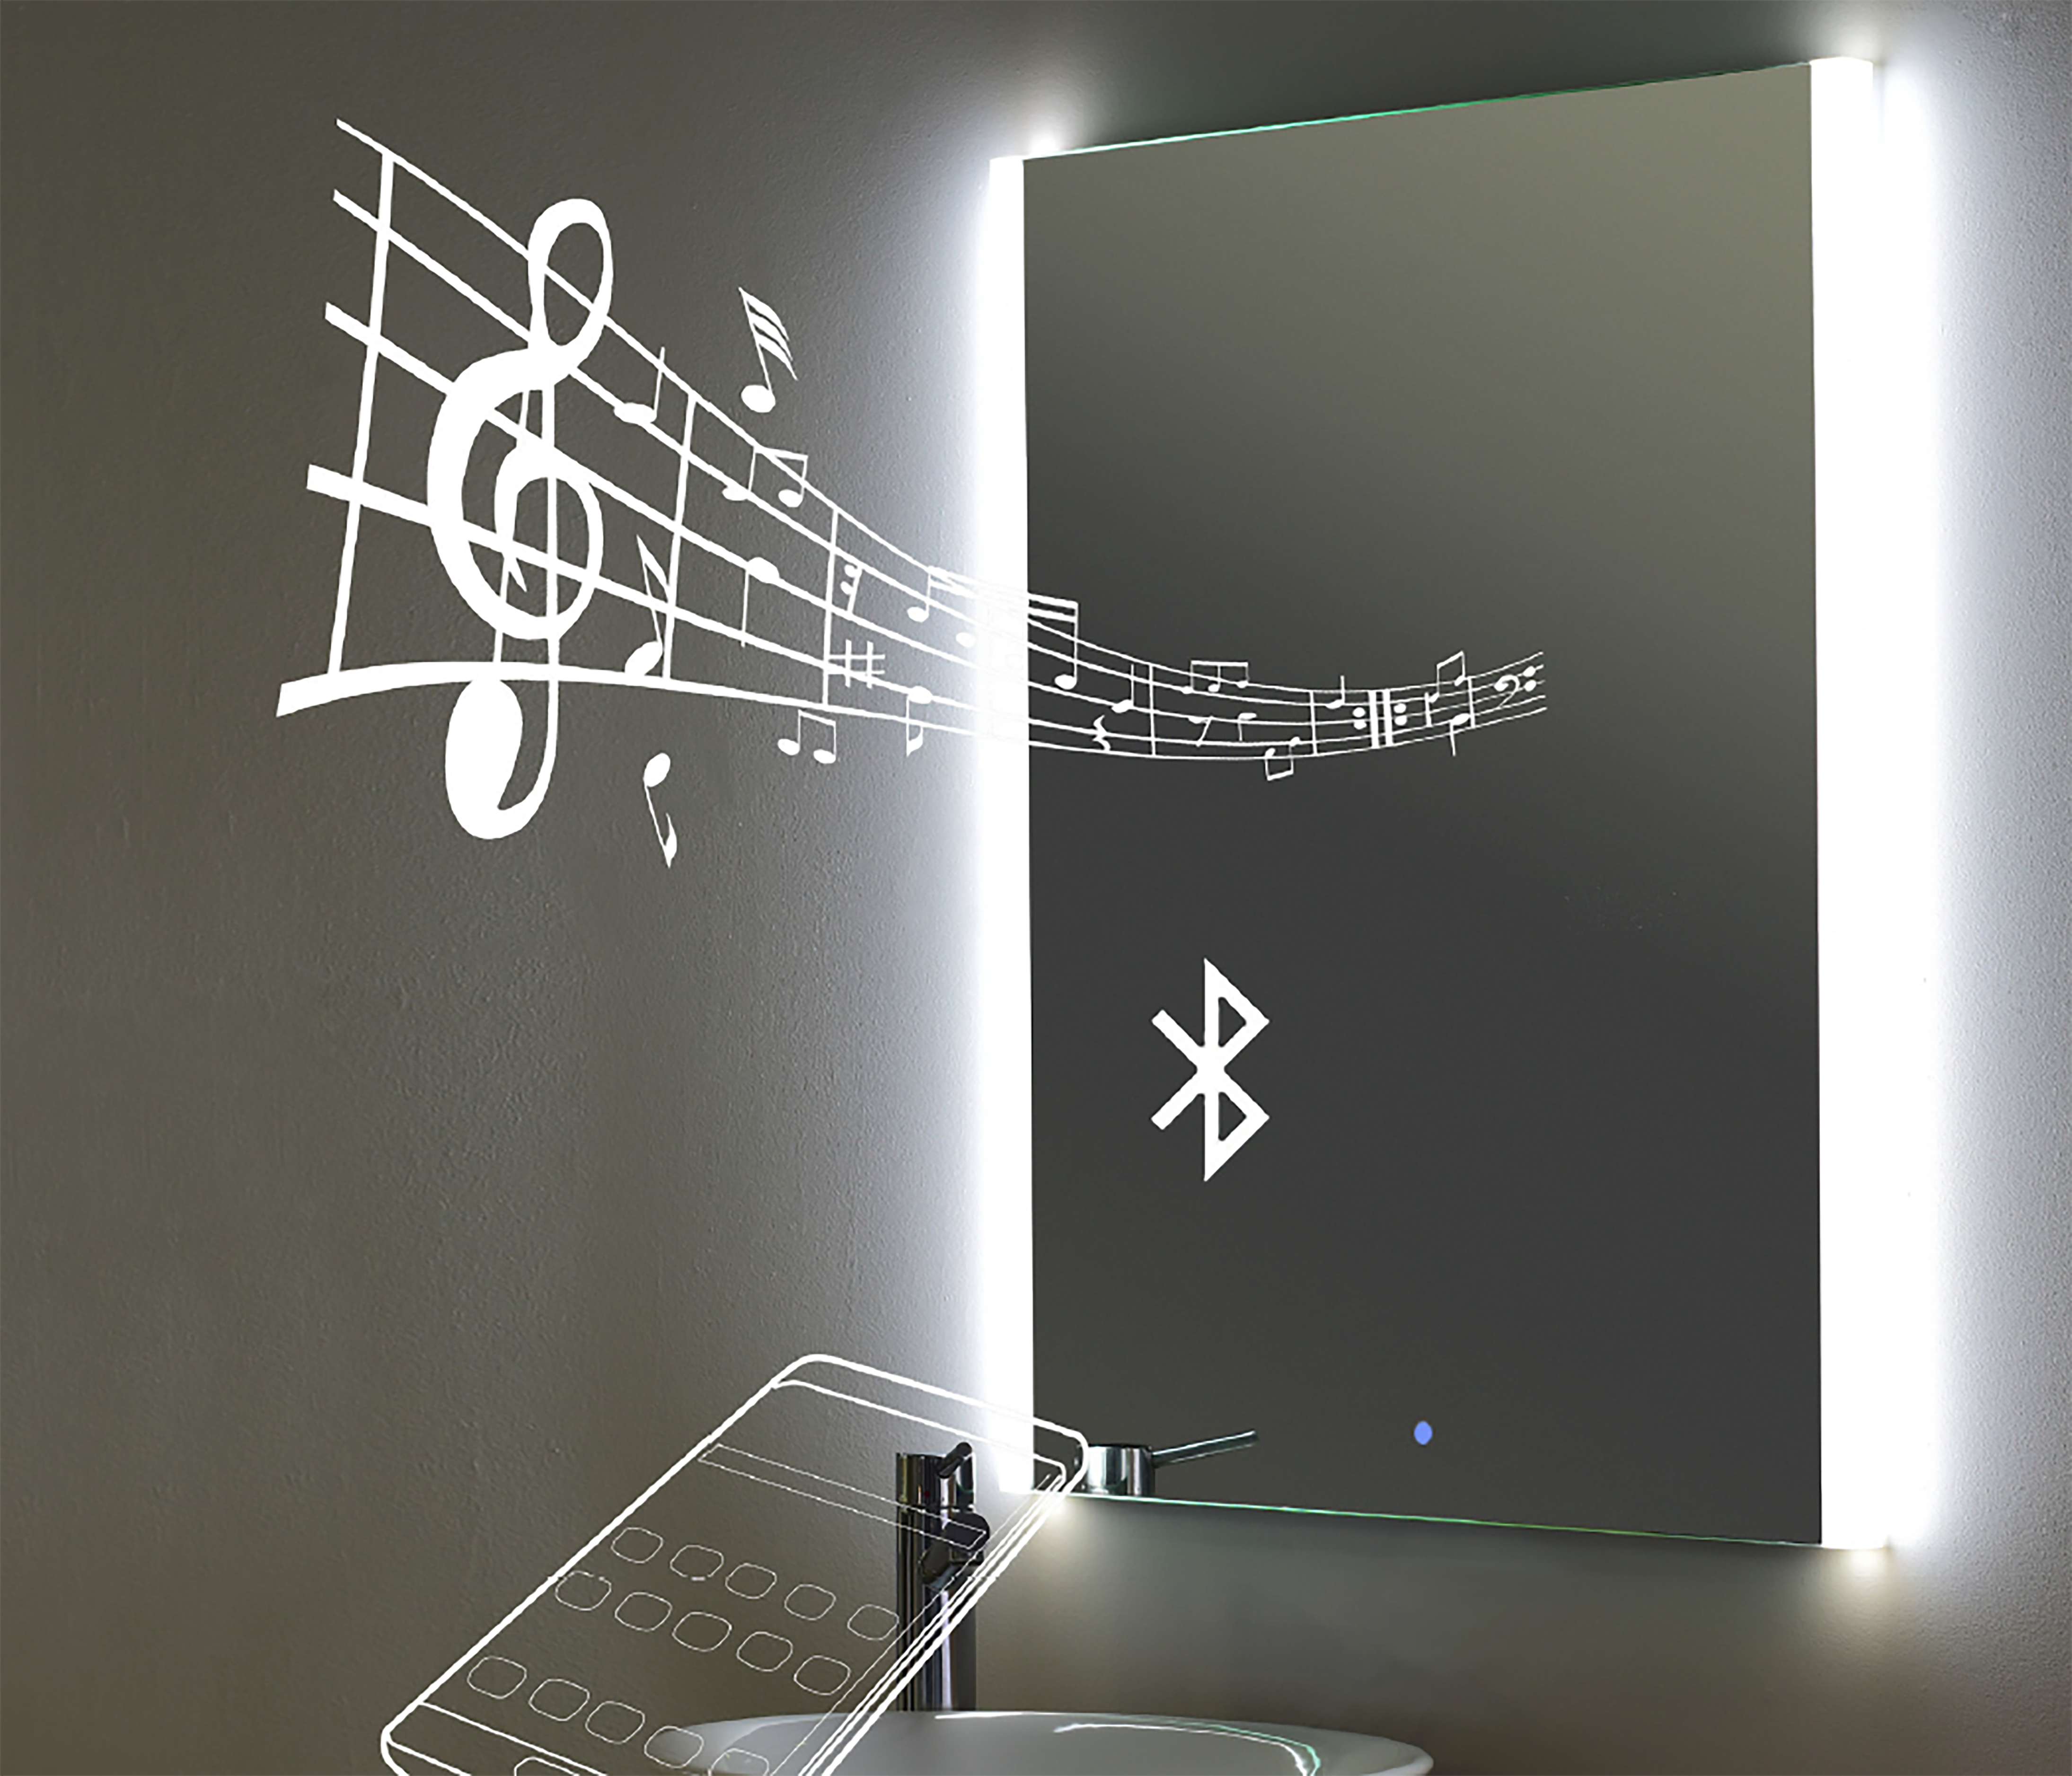 Espejo de baño con luz led led bluetooth antivaho 80x100 cm